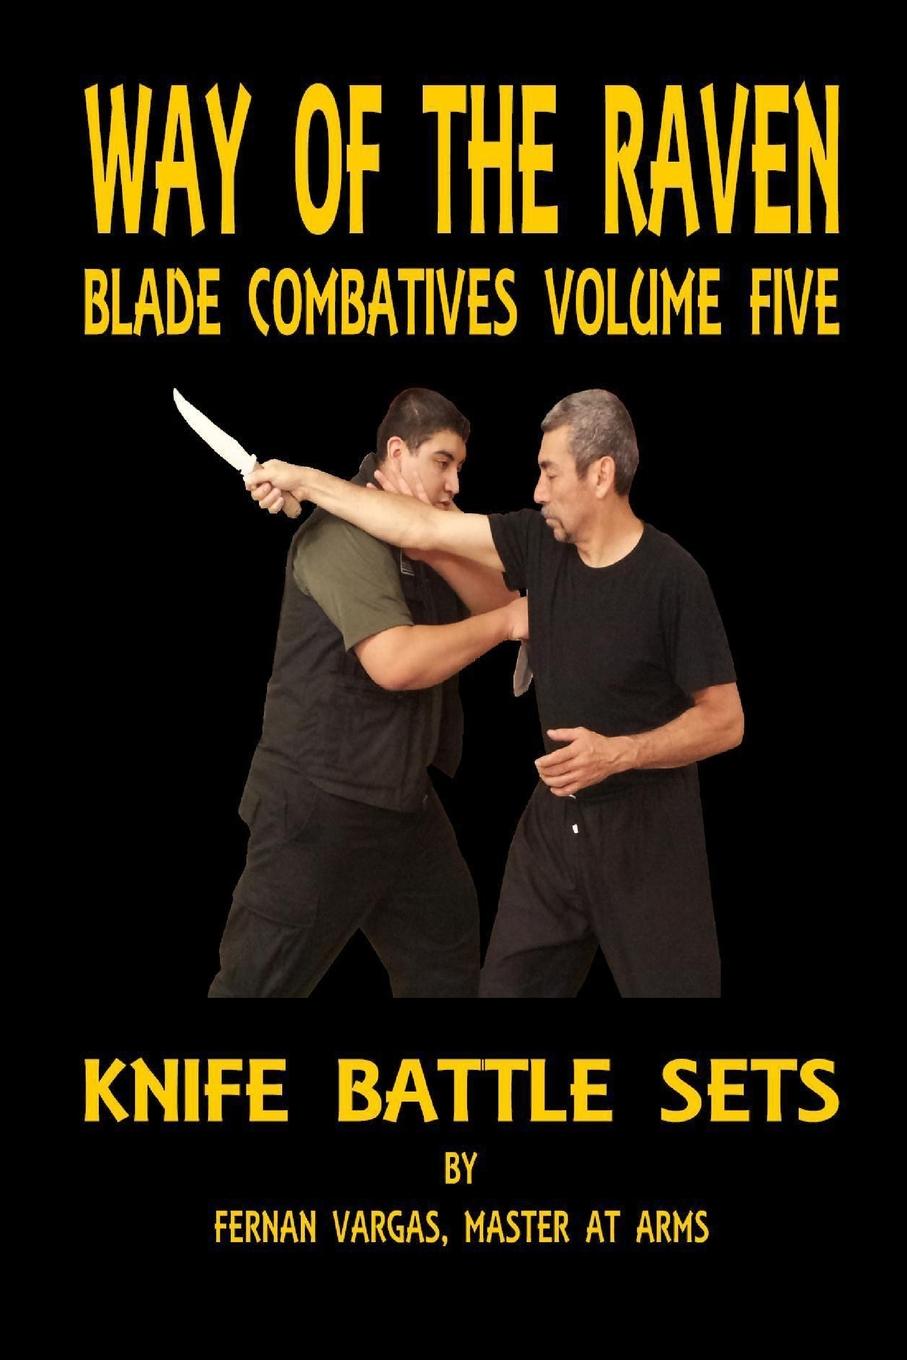 Way of the Raven Blade Combatives Volume Five. Knife Battle Sets